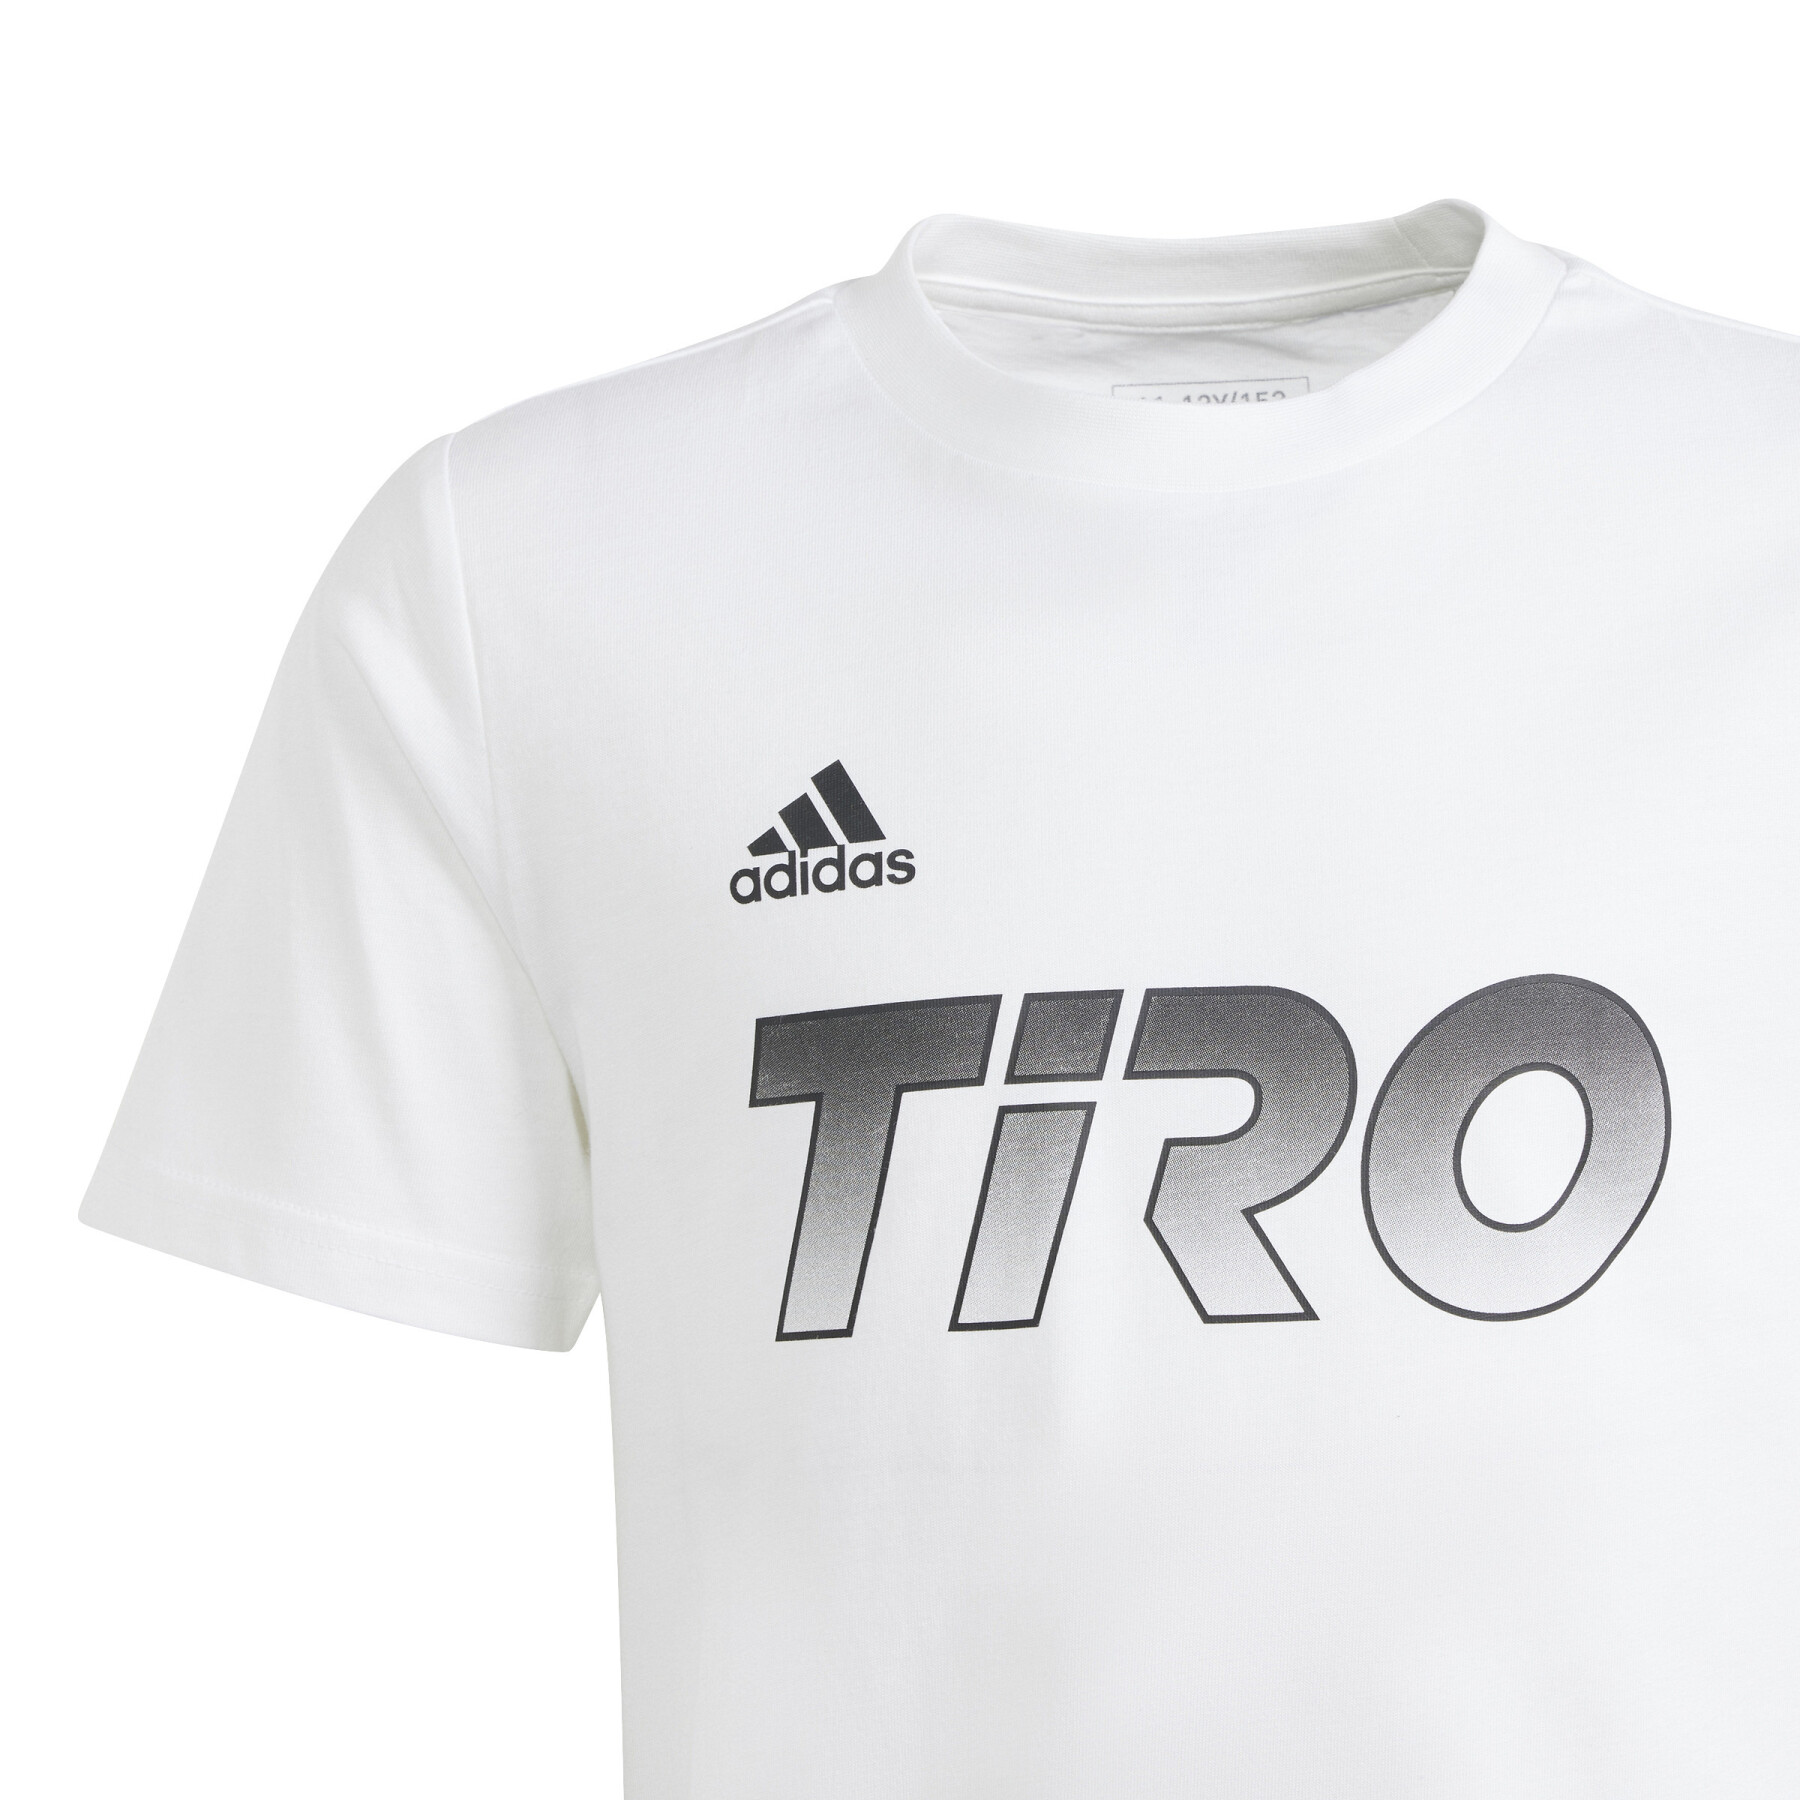 Kinder-T-shirt adidas Graphic House of Tiro